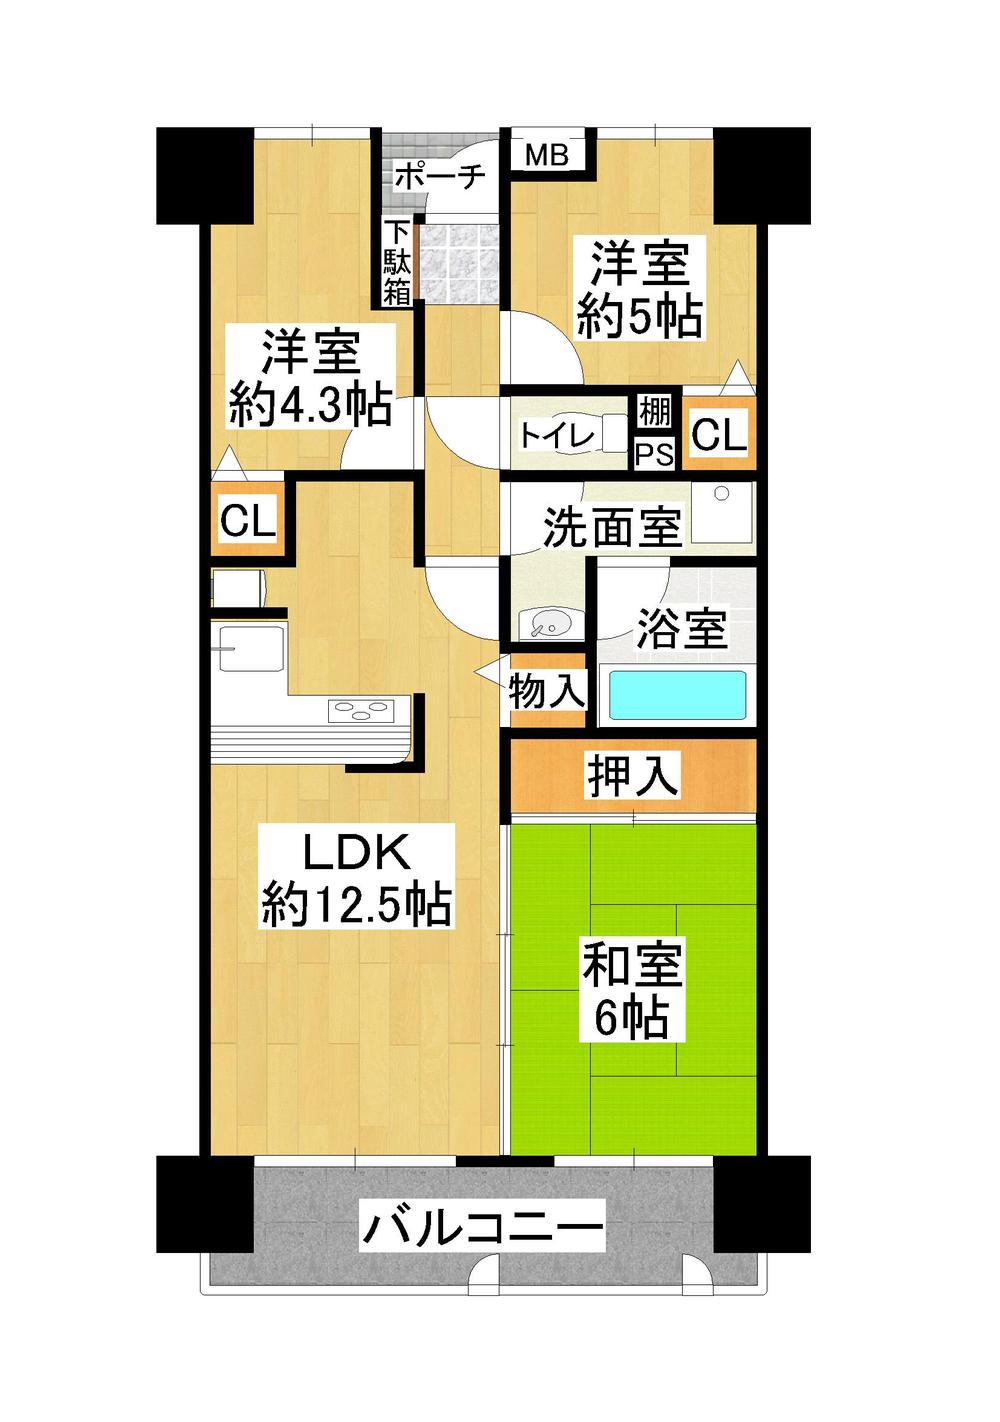 Floor plan. 3LDK, Price 14.9 million yen, Footprint 64.4 sq m , Balcony area 9.52 sq m